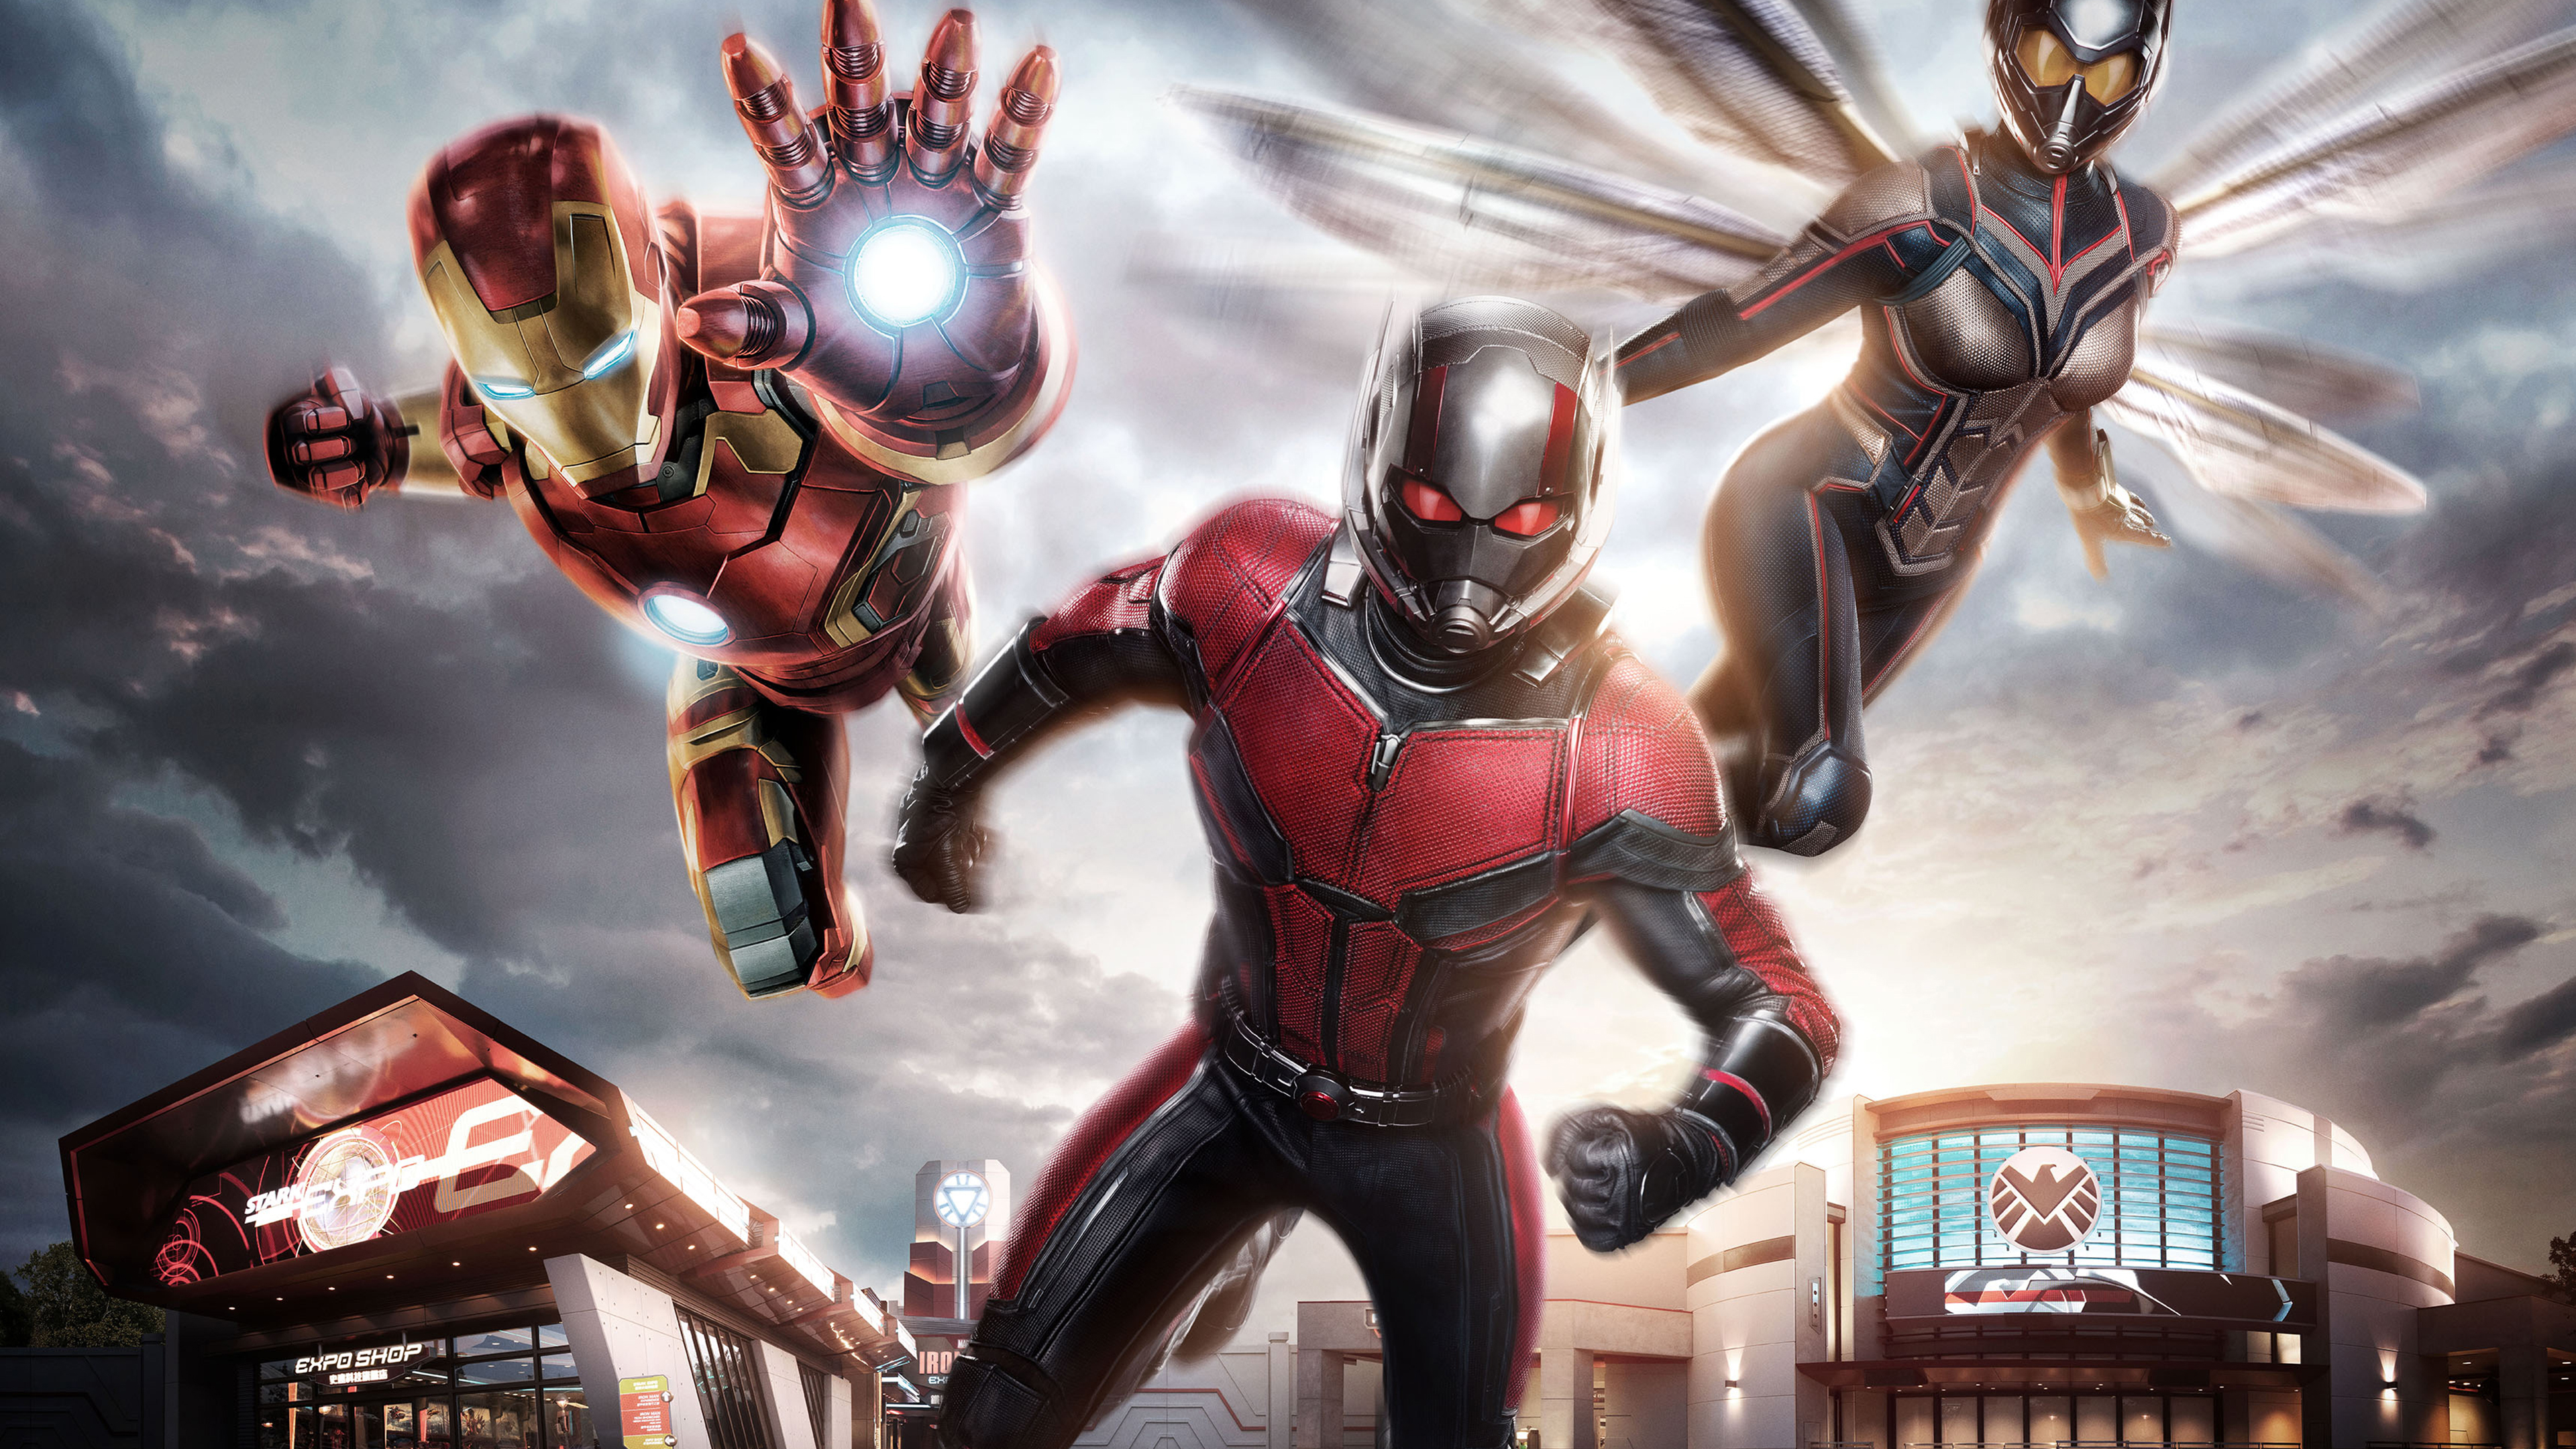 Iron Man Ant Man Wasp 4k A Trip To Hong Kong Disneyland 2019